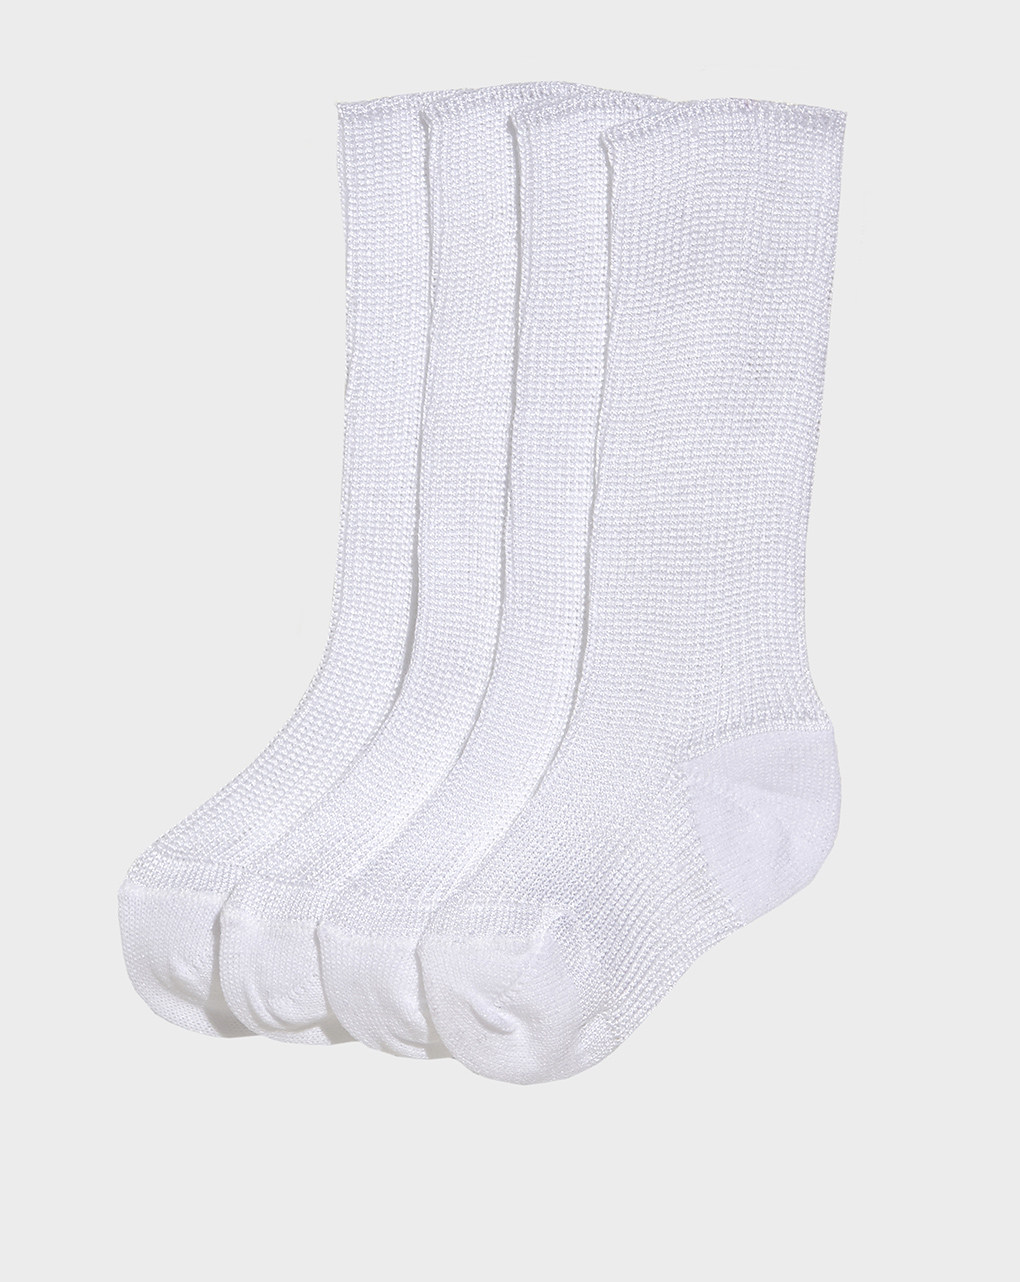 Pack x2 calcetines blancos primeros días - Prénatal